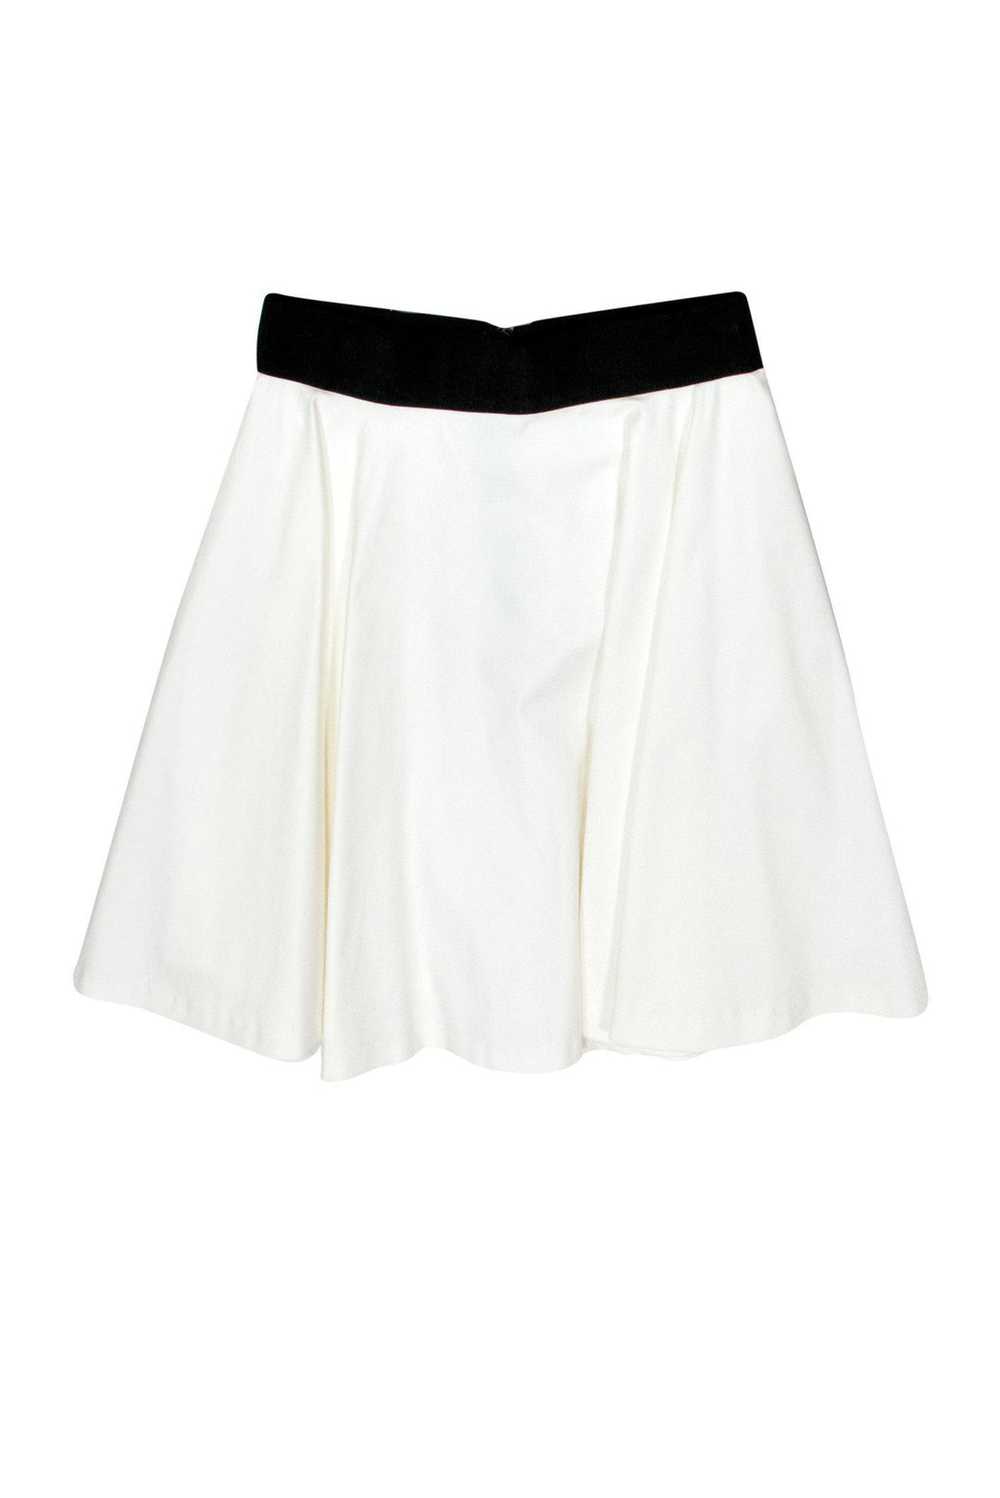 Milly - White Flare Skirt w/ Black Waistband Sz 4 - image 3